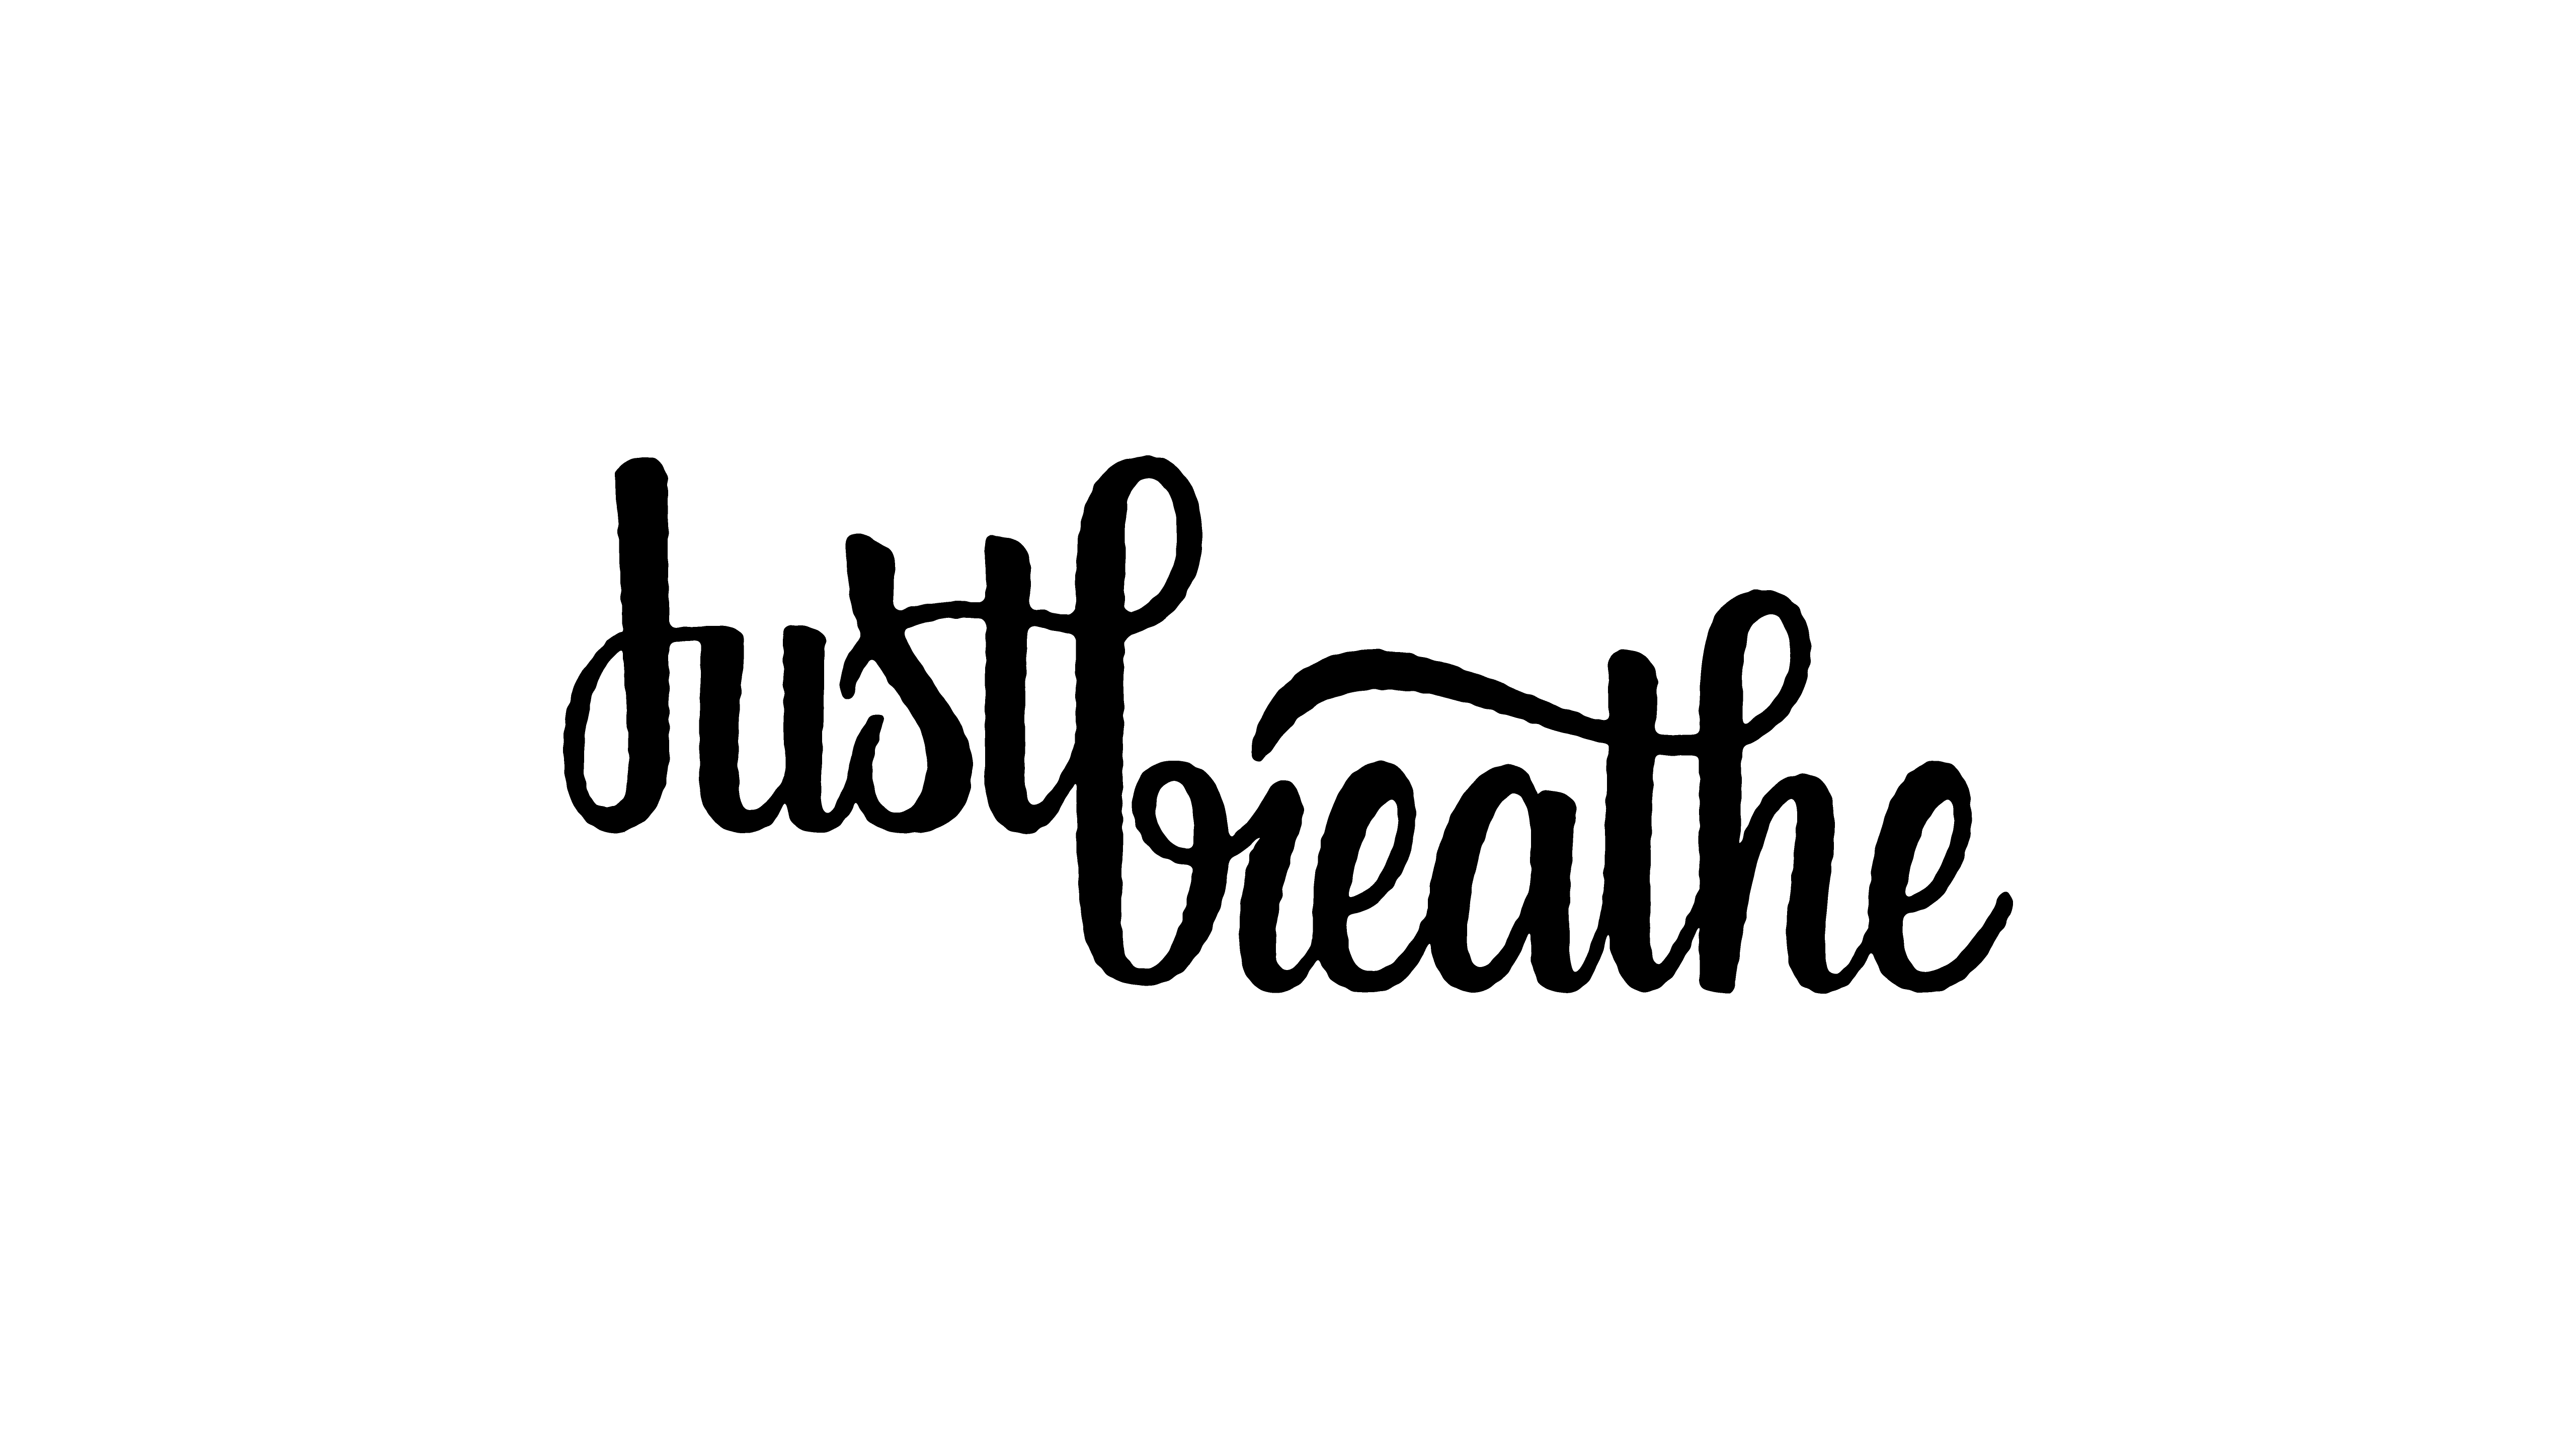 Just Breathe wallpaper by blumistique  Download on ZEDGE  7632